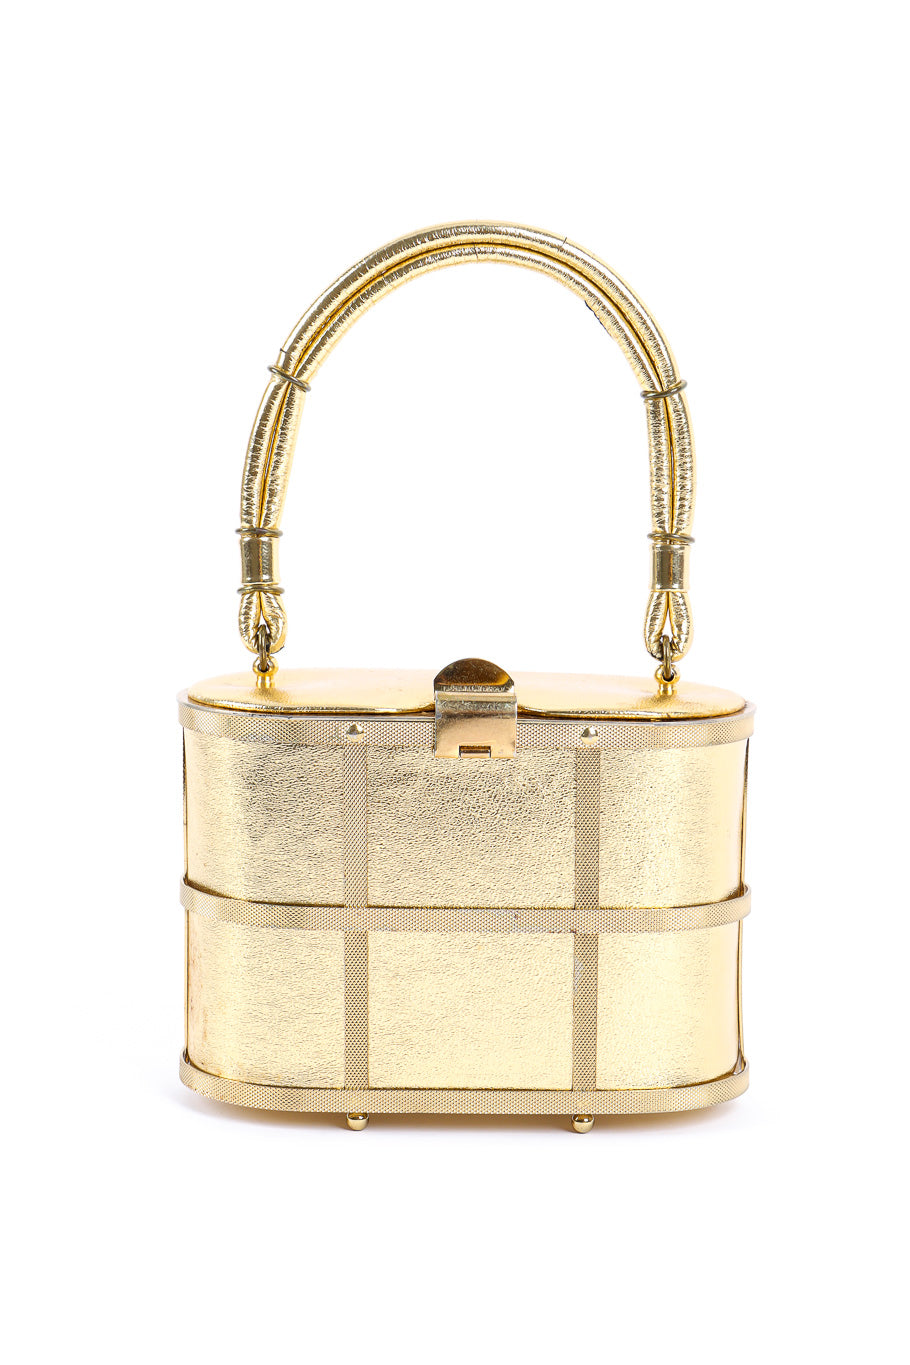 Etra metallic caged oval box bag product shot @recessla